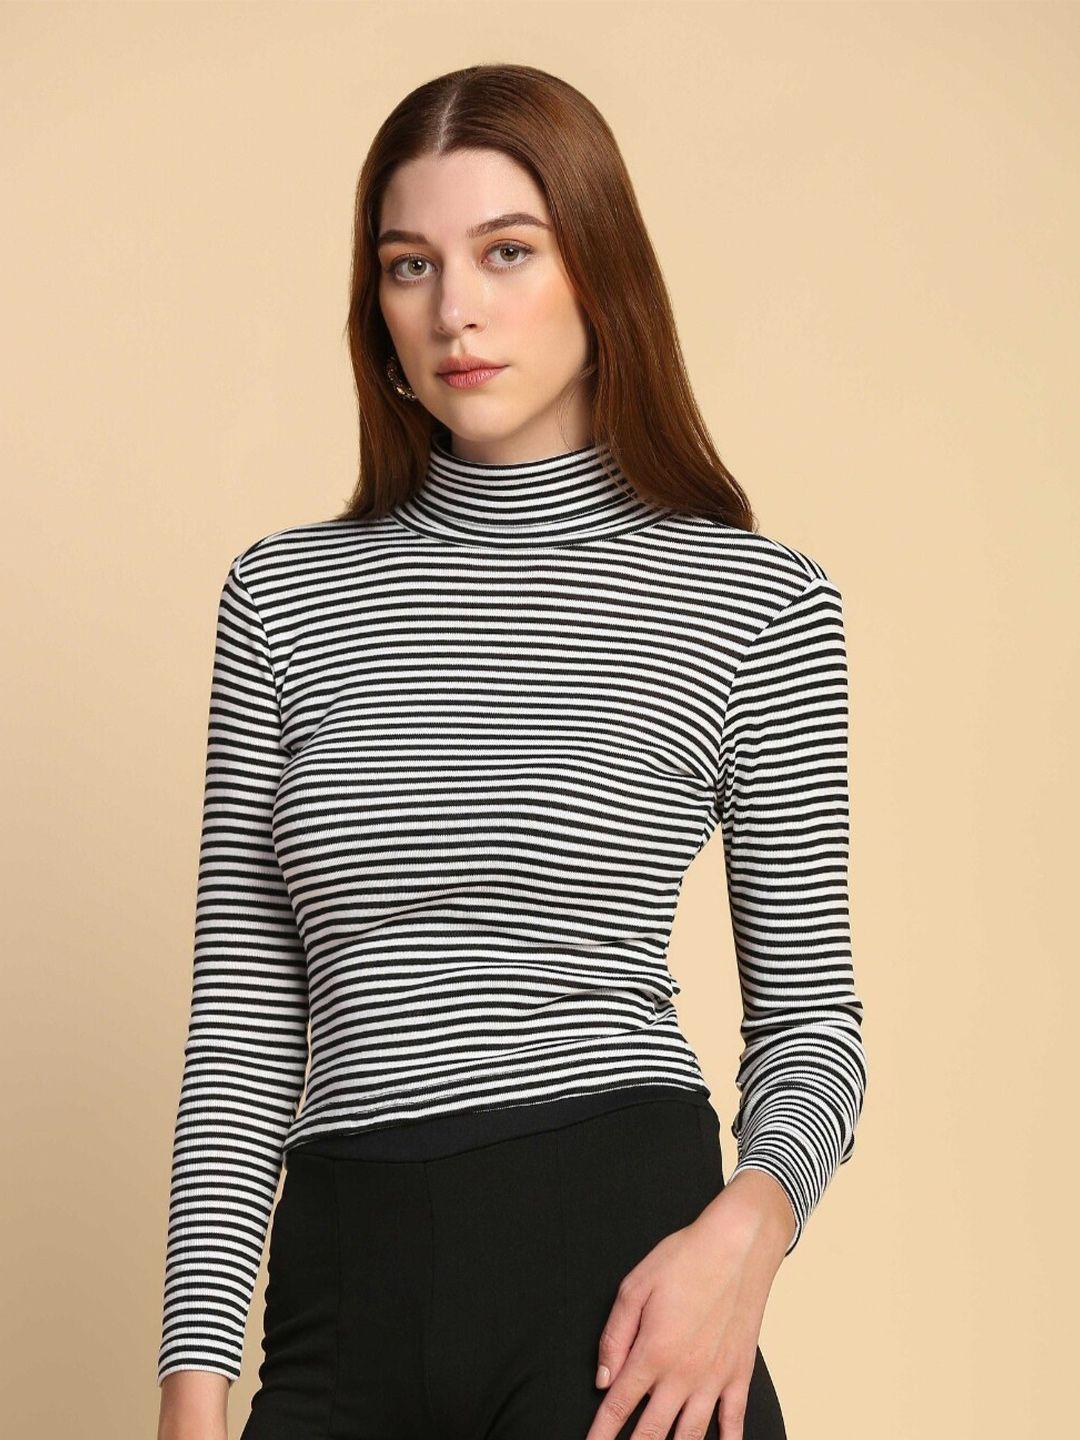 starin white & black striped top